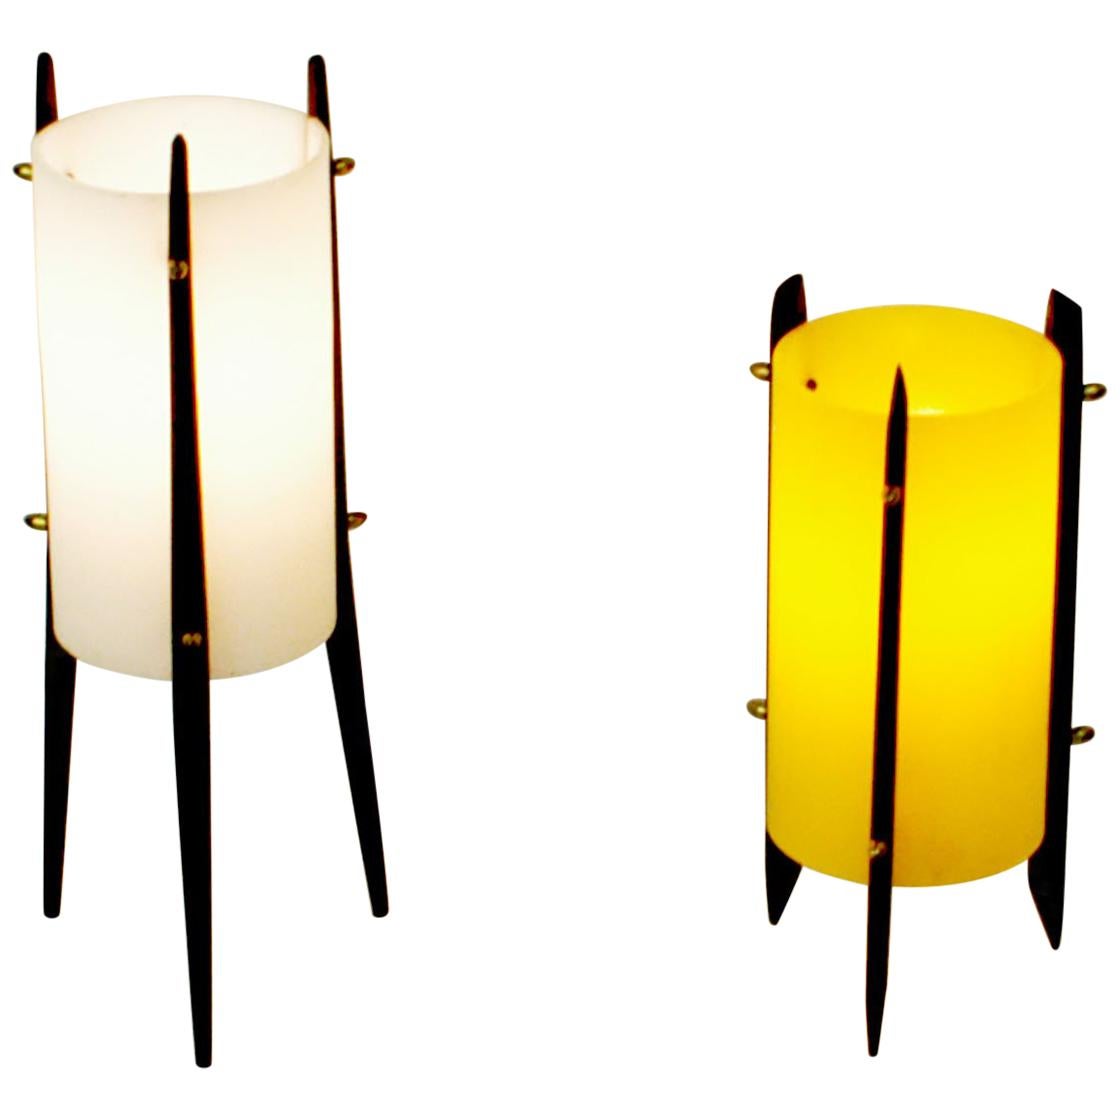 Mid-20th Century Scandinavian Teak Table Lamp Attr. to U. & Ö. Kristiansson for Luxus Sweden For Sale